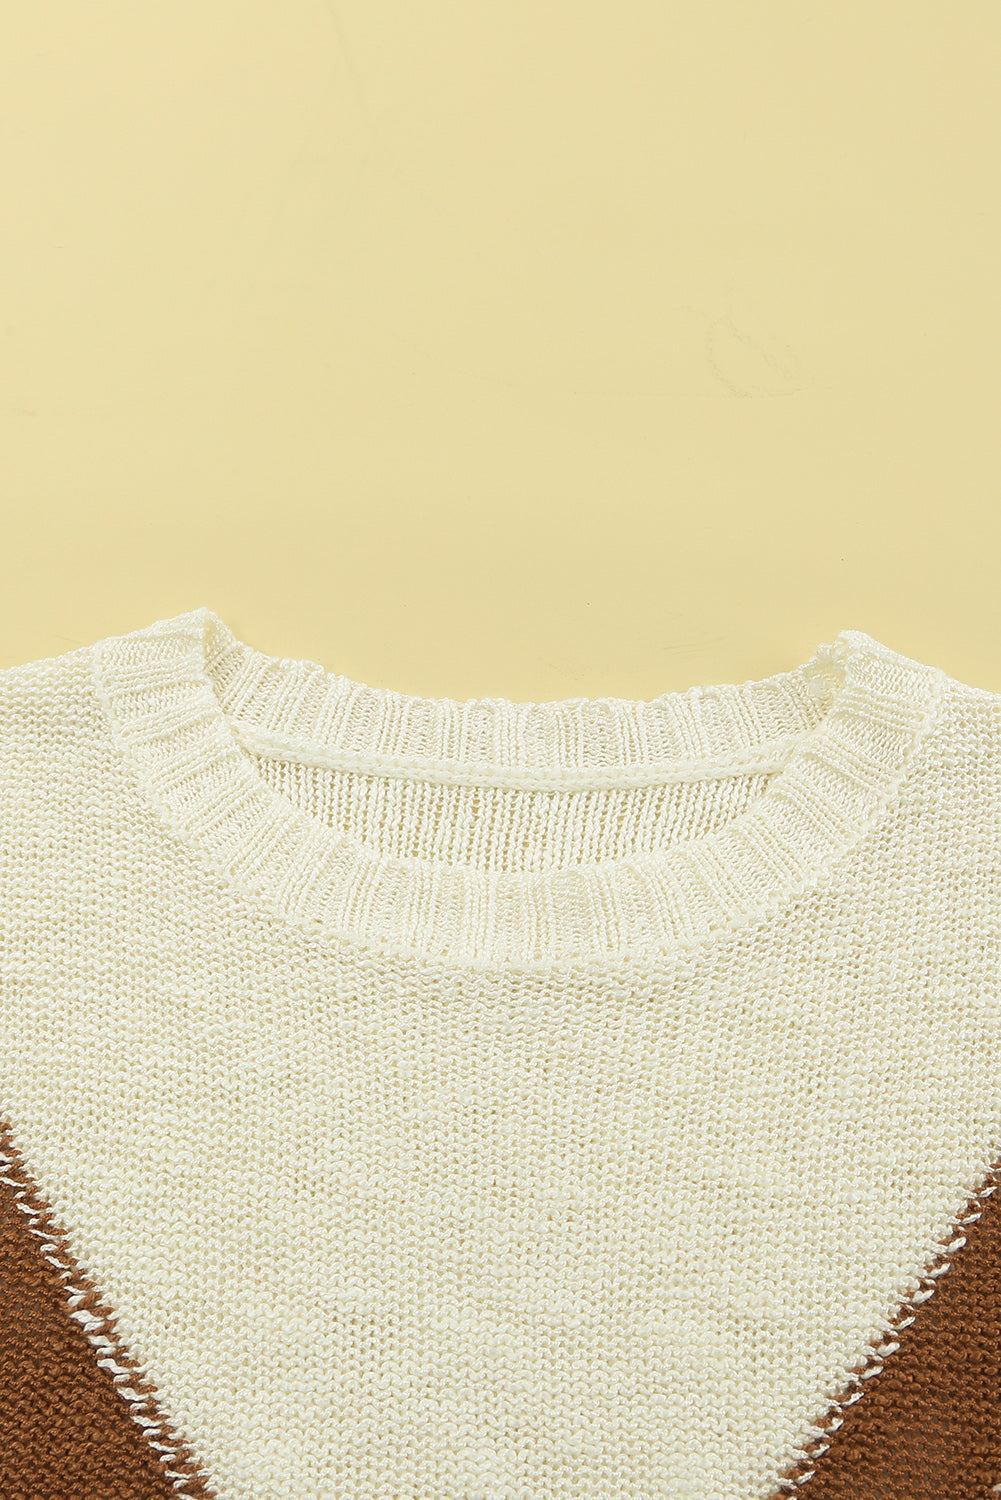 Multicolor Chevron Casual Drop Shoulder Knit Sweater